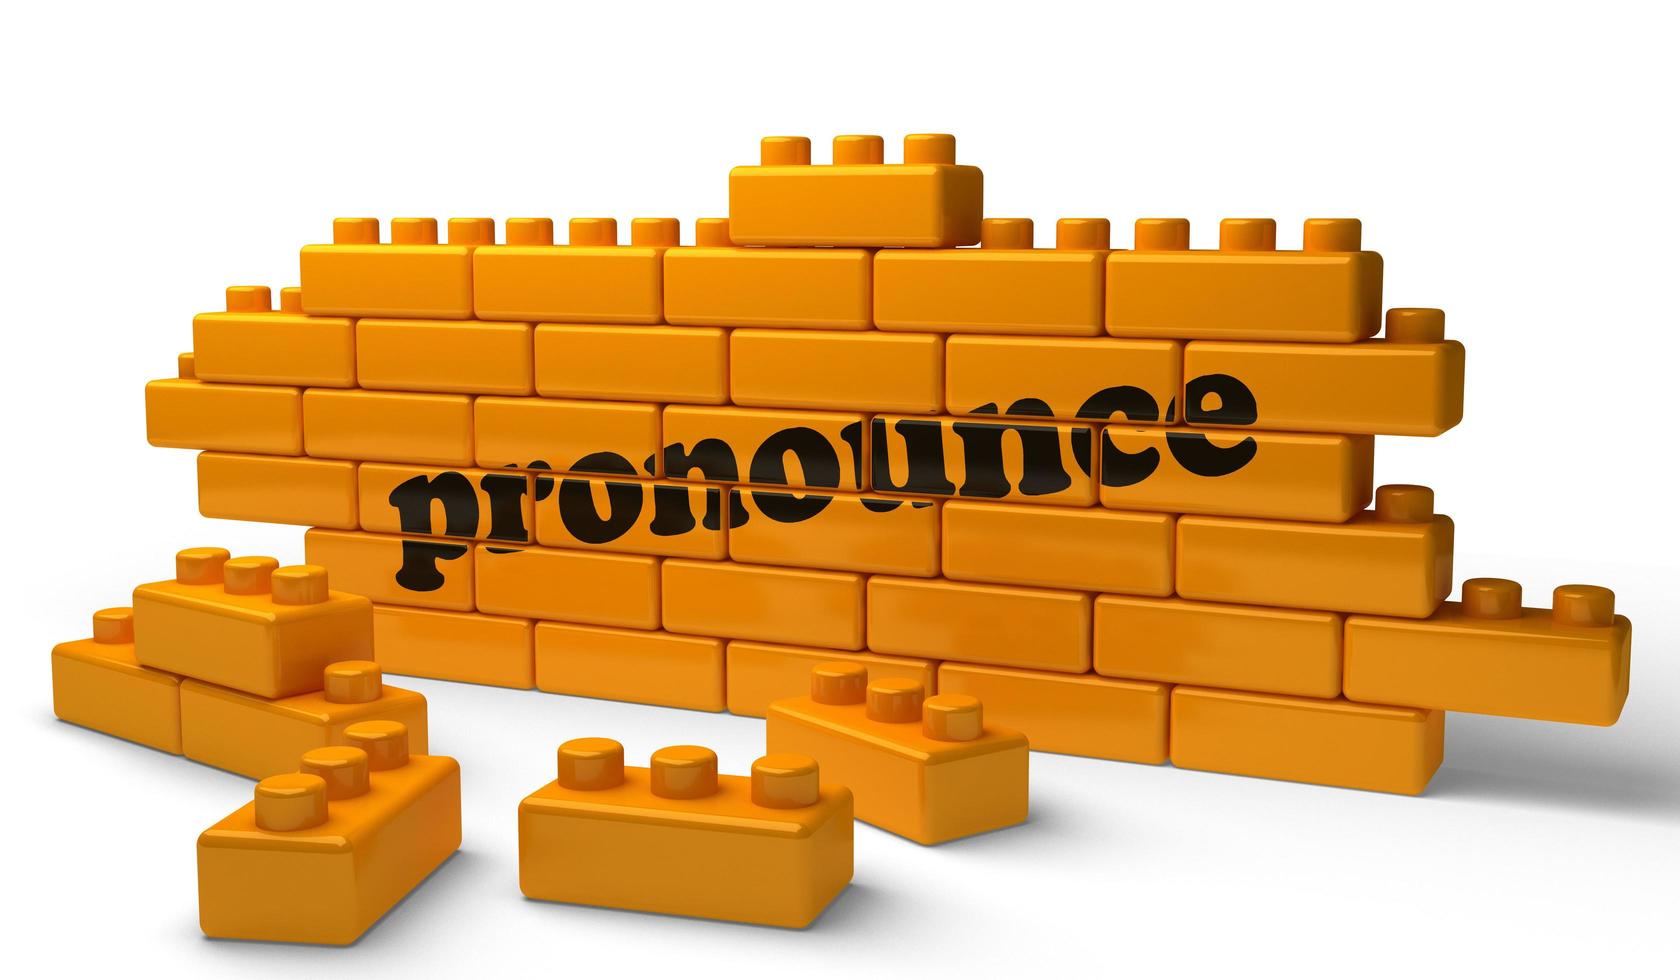 pronounce word on yellow brick wall photo